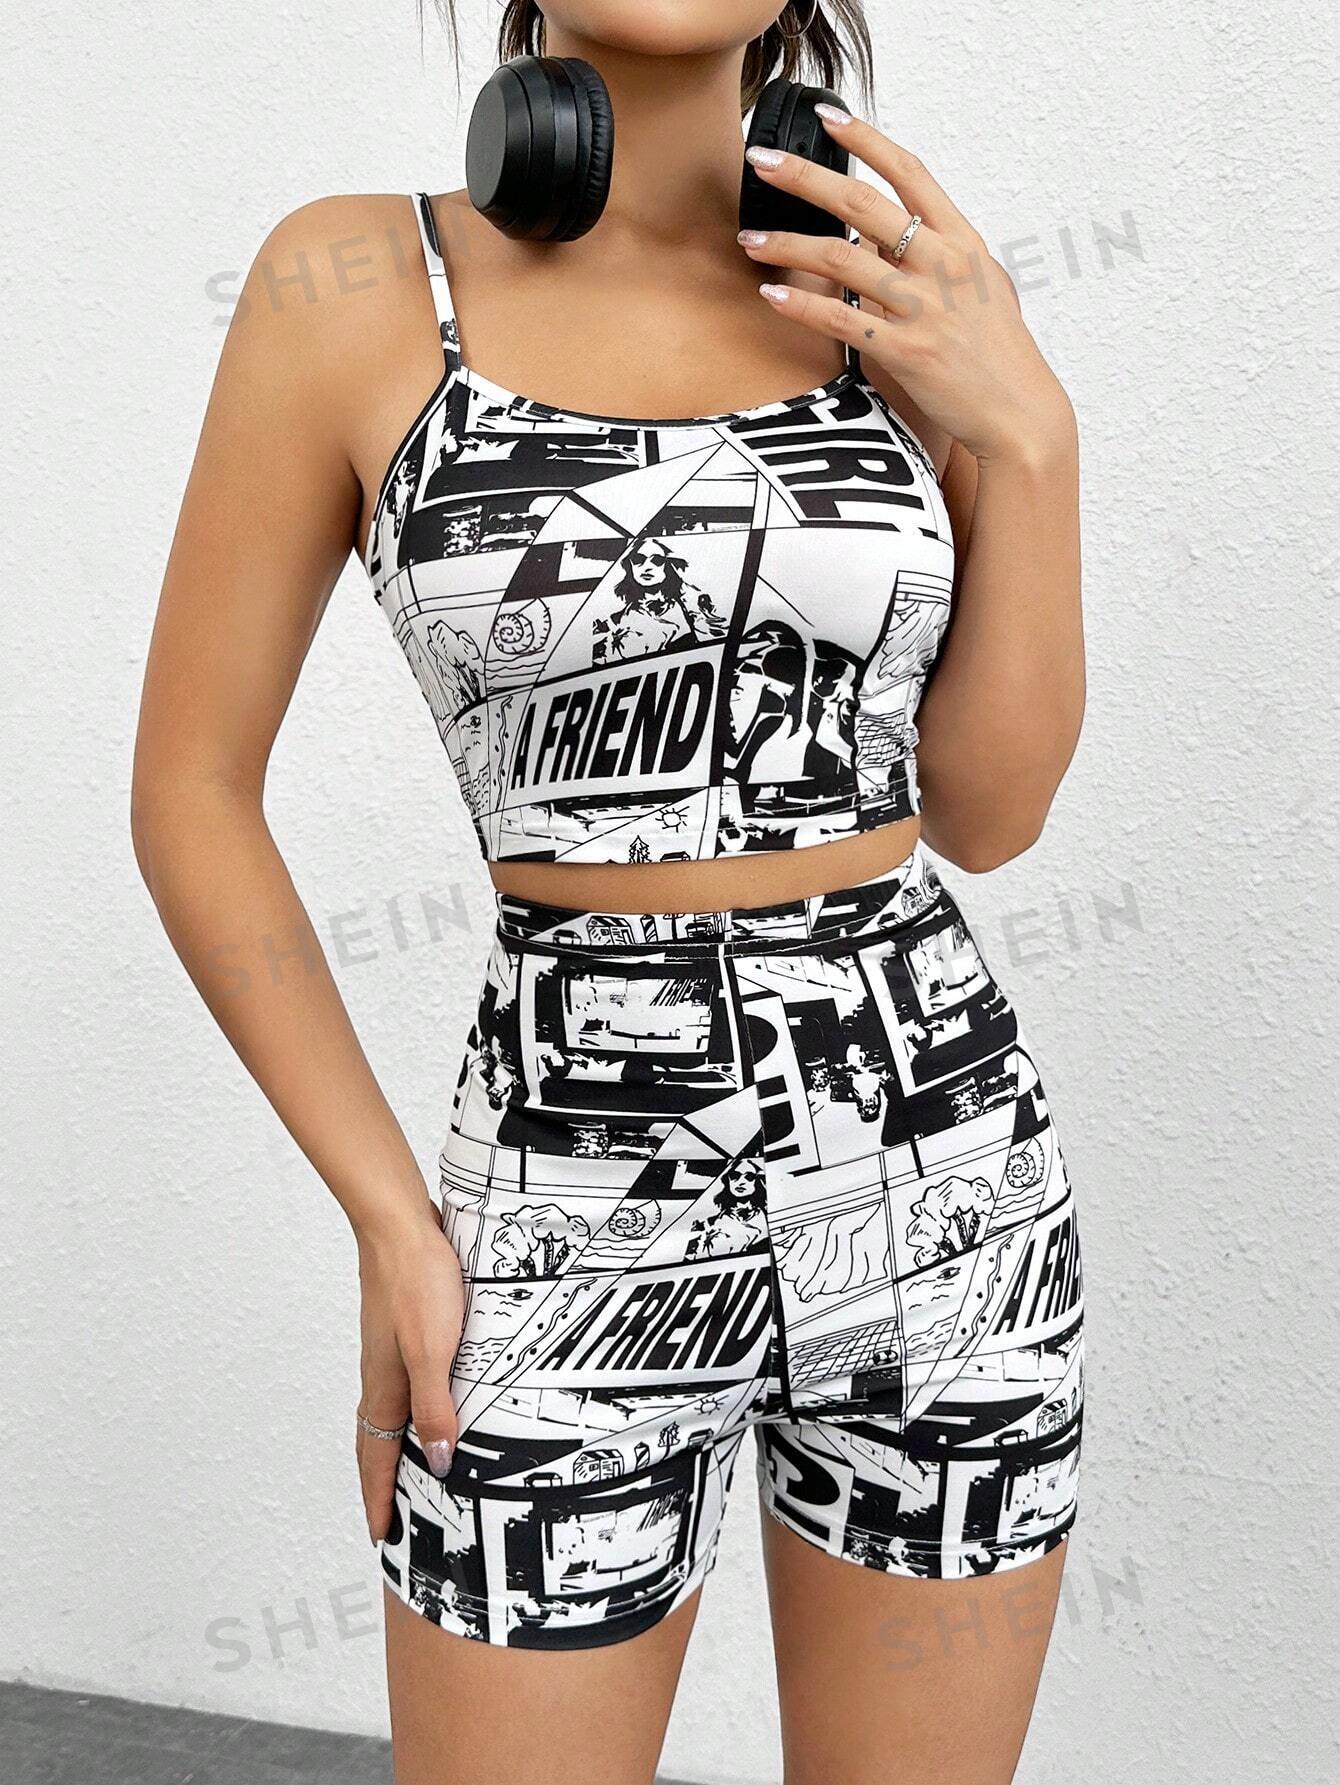 SHEIN EZwear Pop Art Print Cami Top & Biker Shorts - Negative Apparel